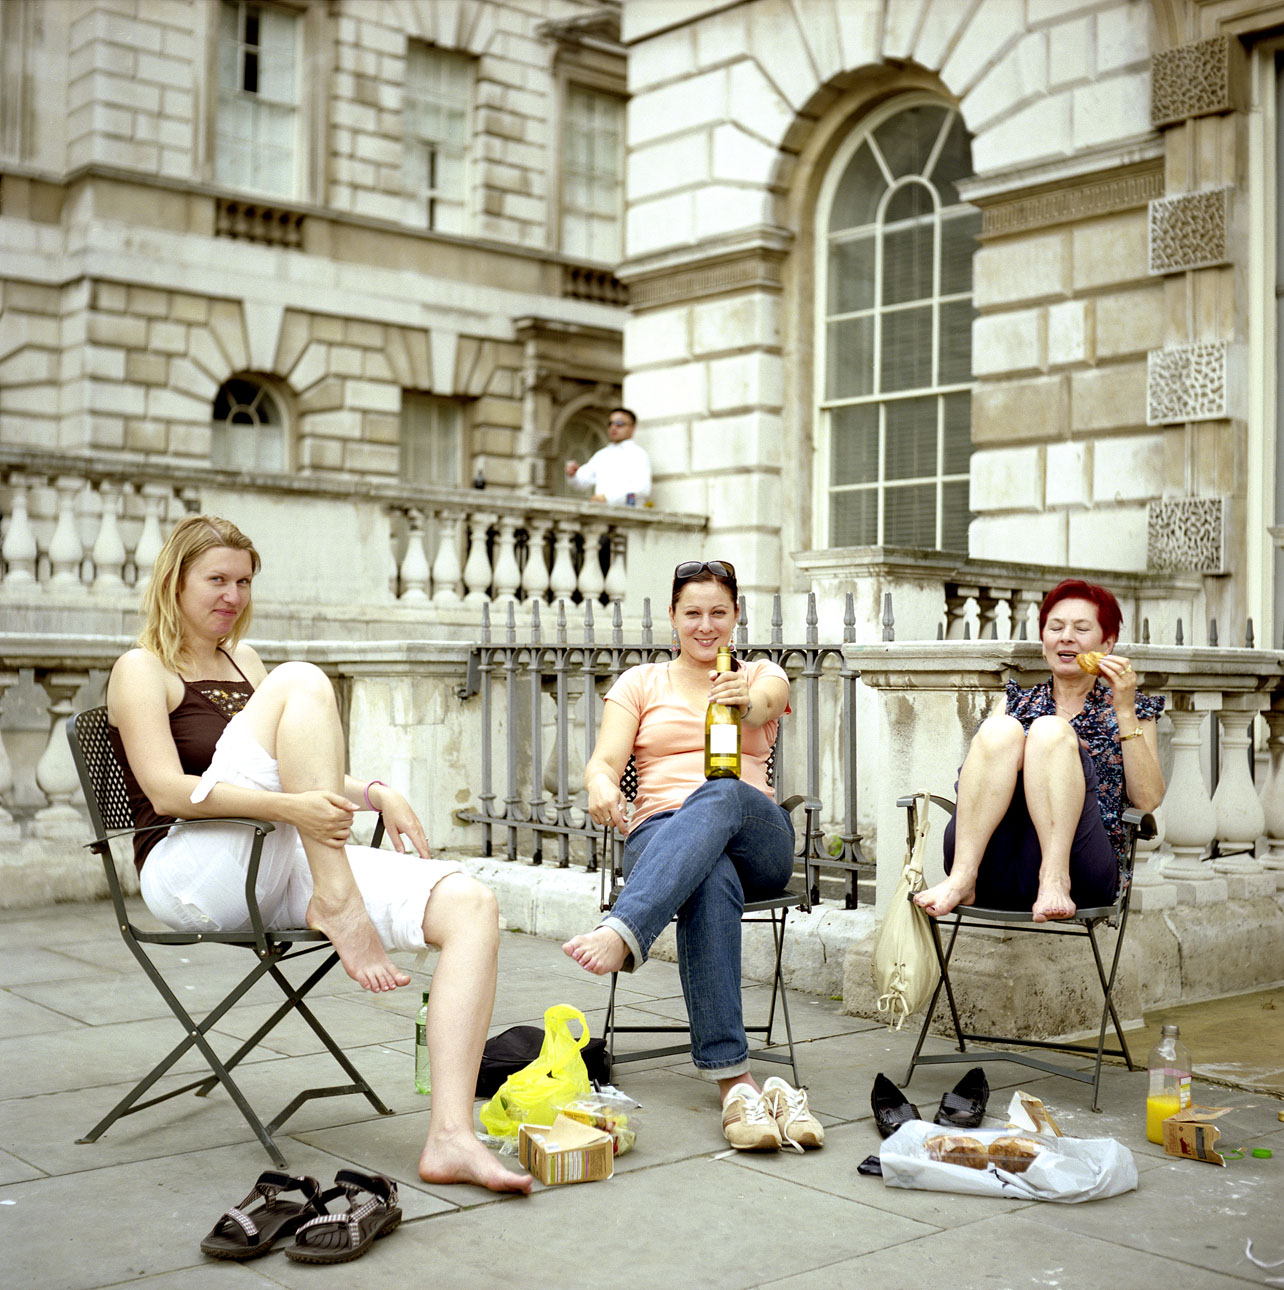 fotka / image Somerset House, Summer in London